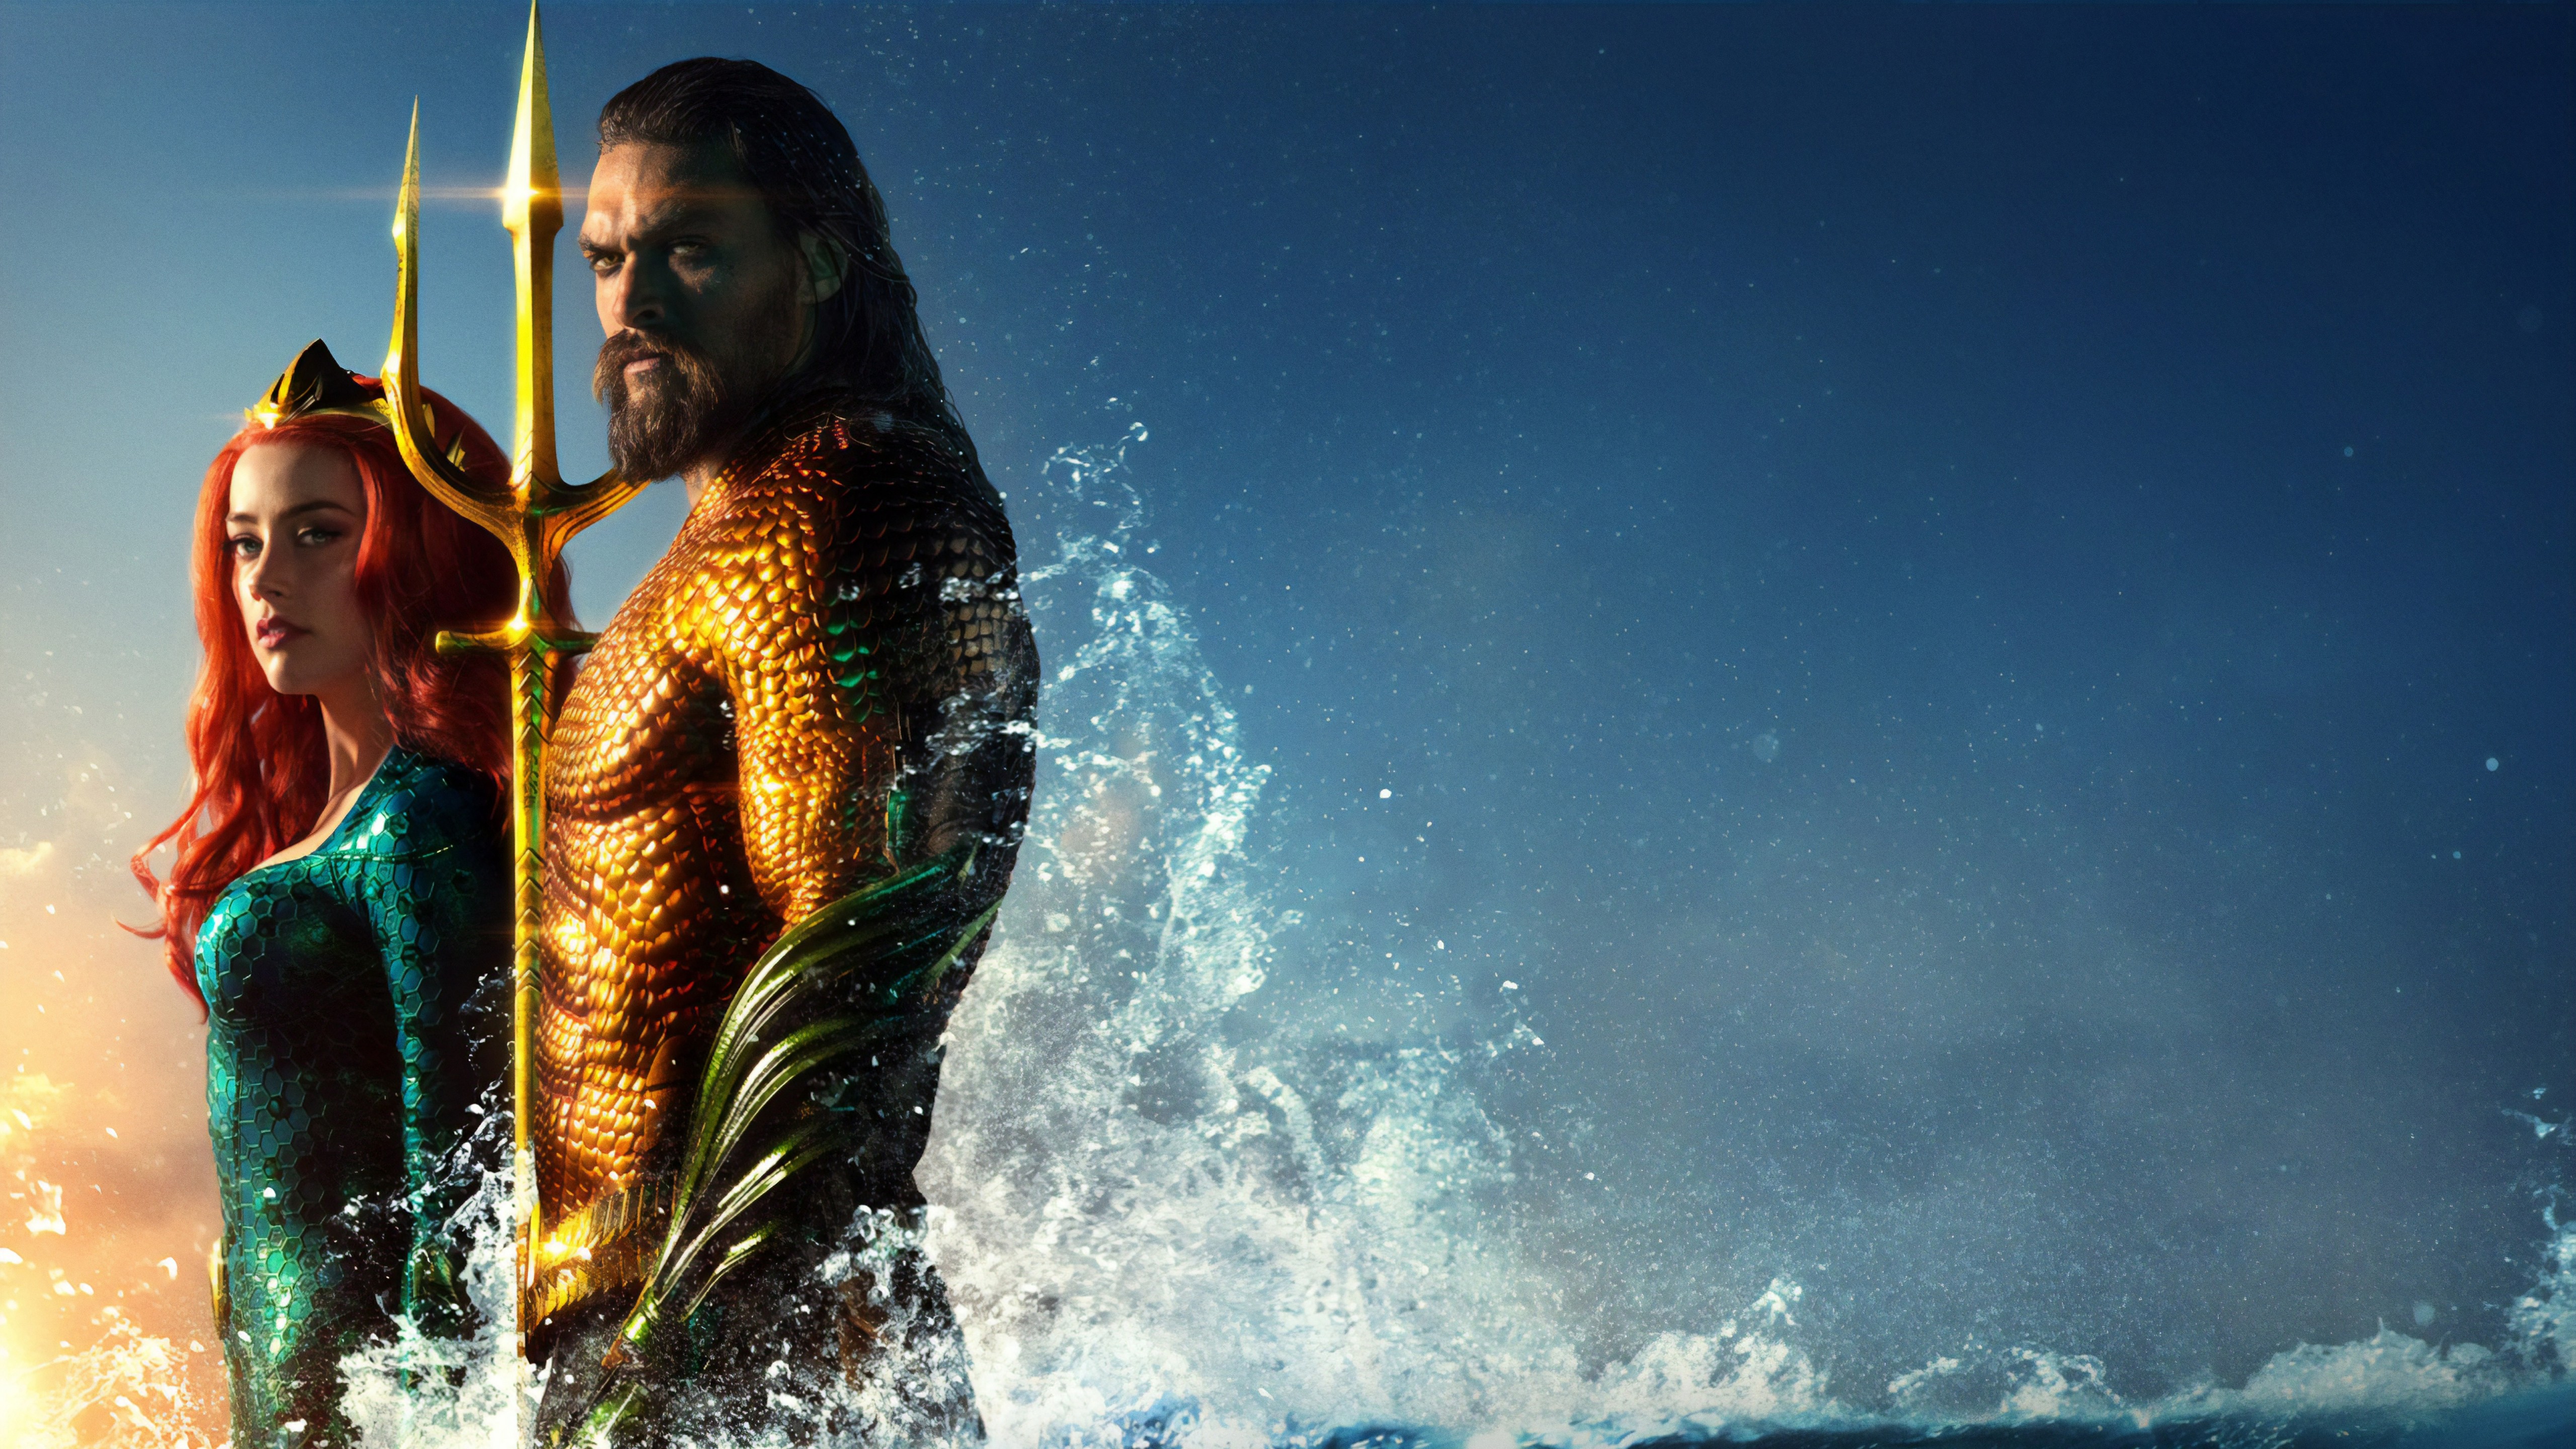 Jason Momoa as Aquaman 4K 8K Wallpapers | HD Wallpapers